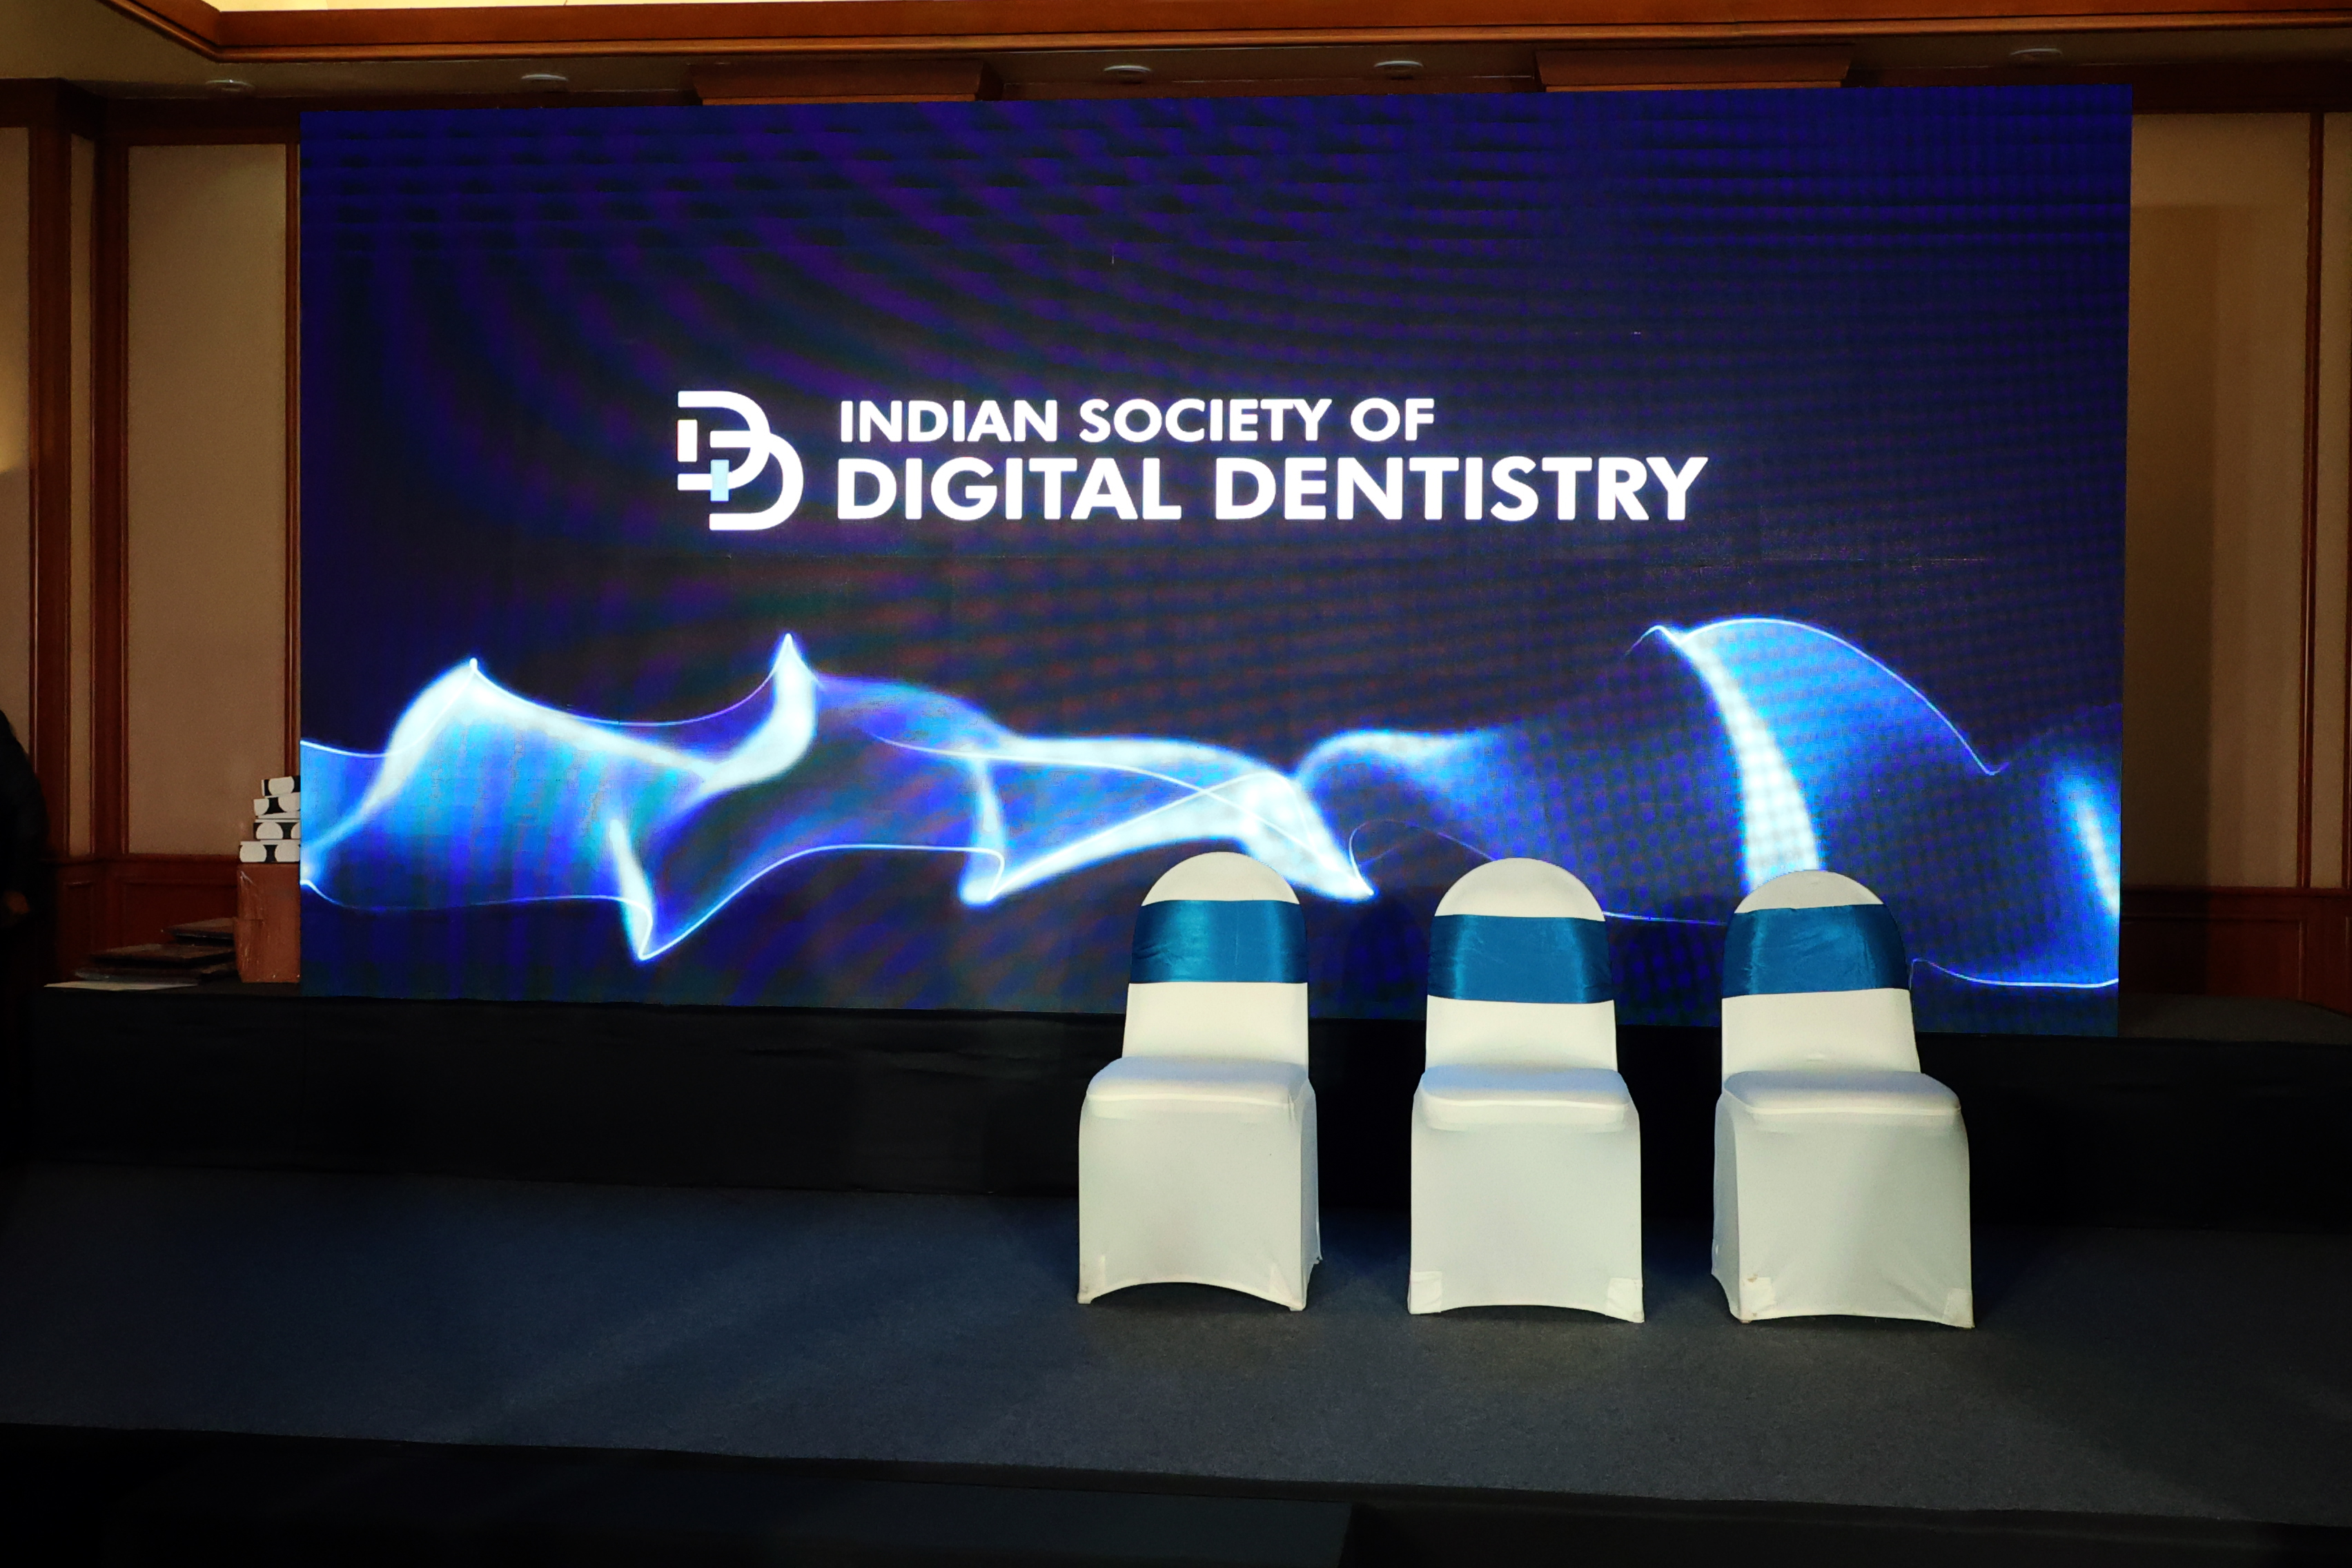 Indian Society of Digital Dentistry